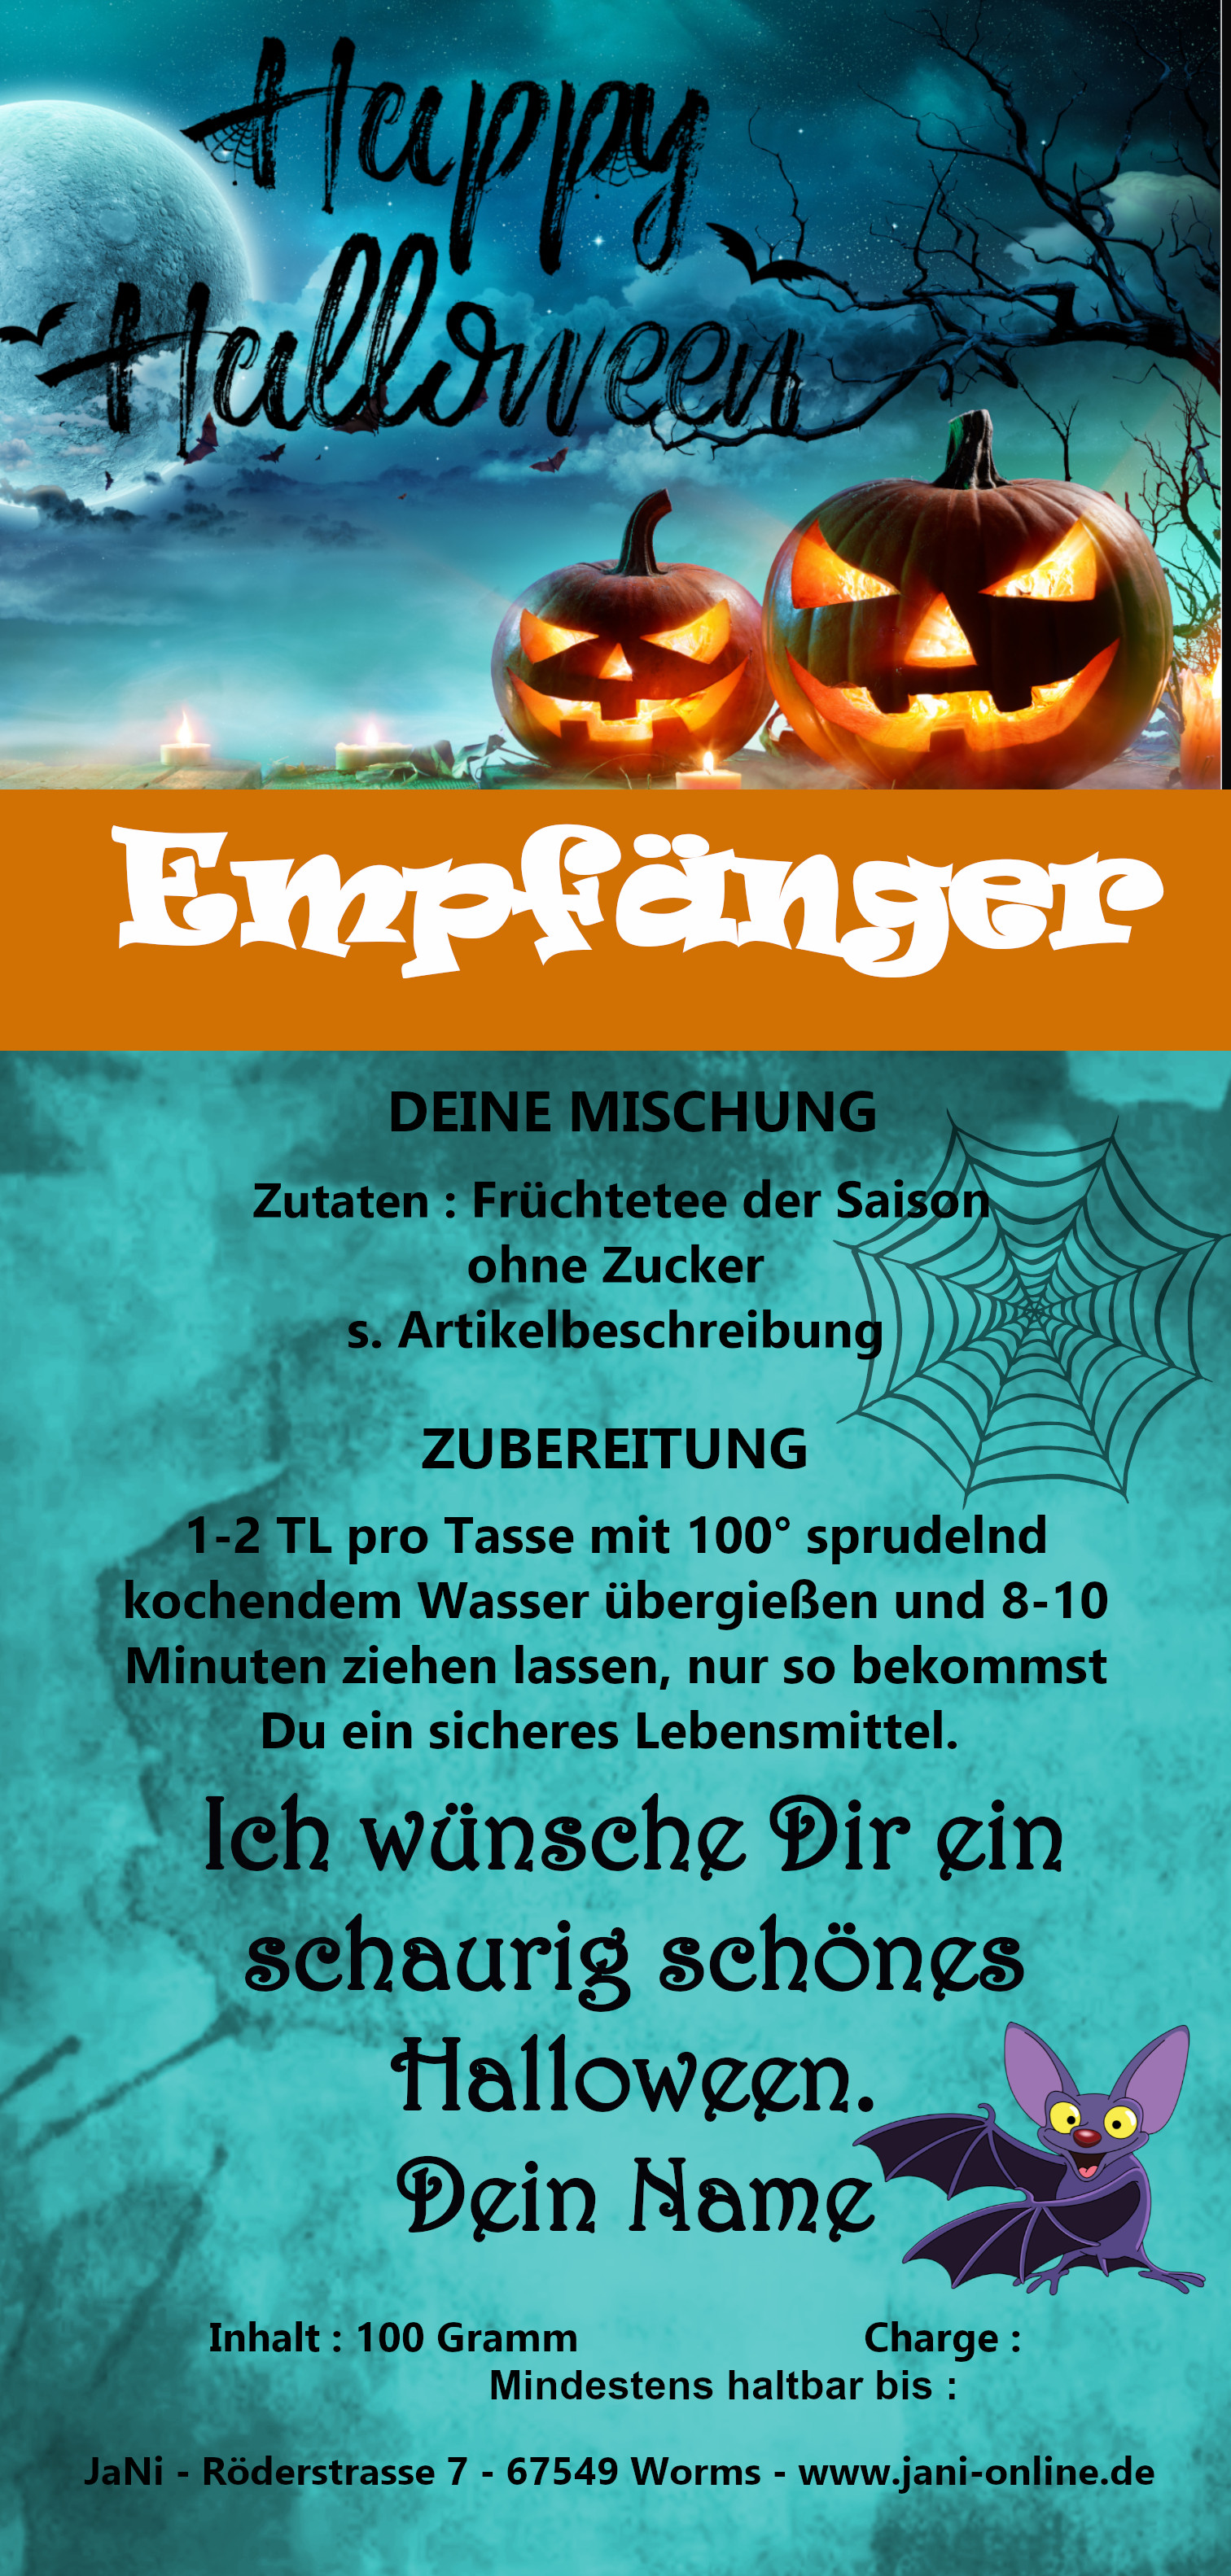 Personalisierter Tee zu Halloween | schaurig lecker | jani-online.de